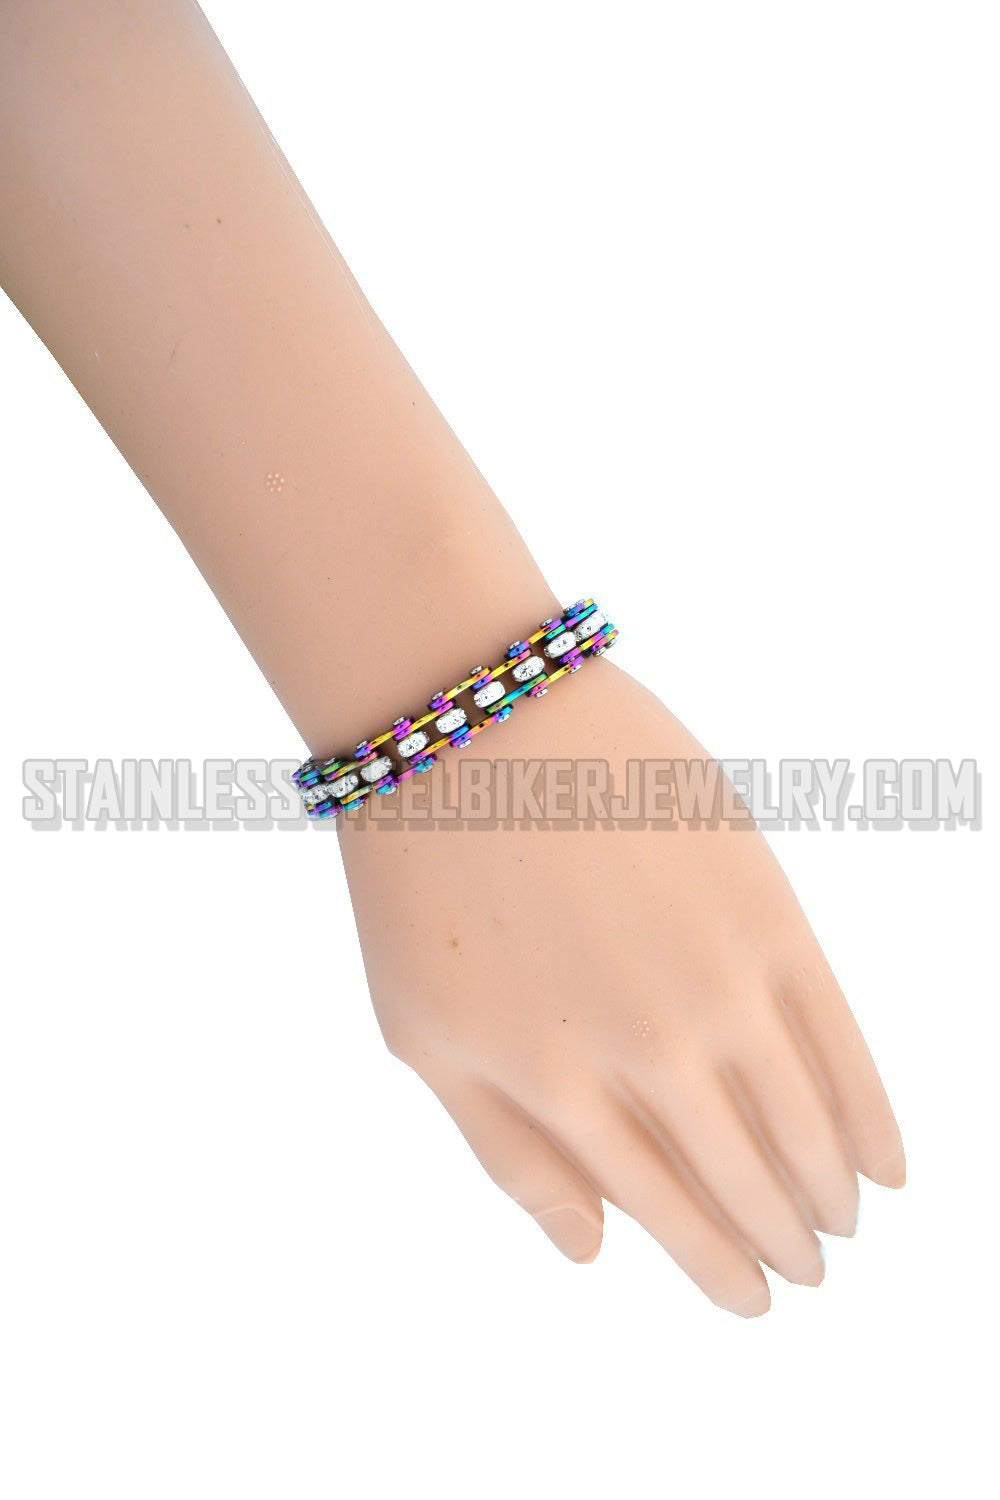 Rainbow Jewelry Stainless Steel Wristband Bicycle Chain Bracelet